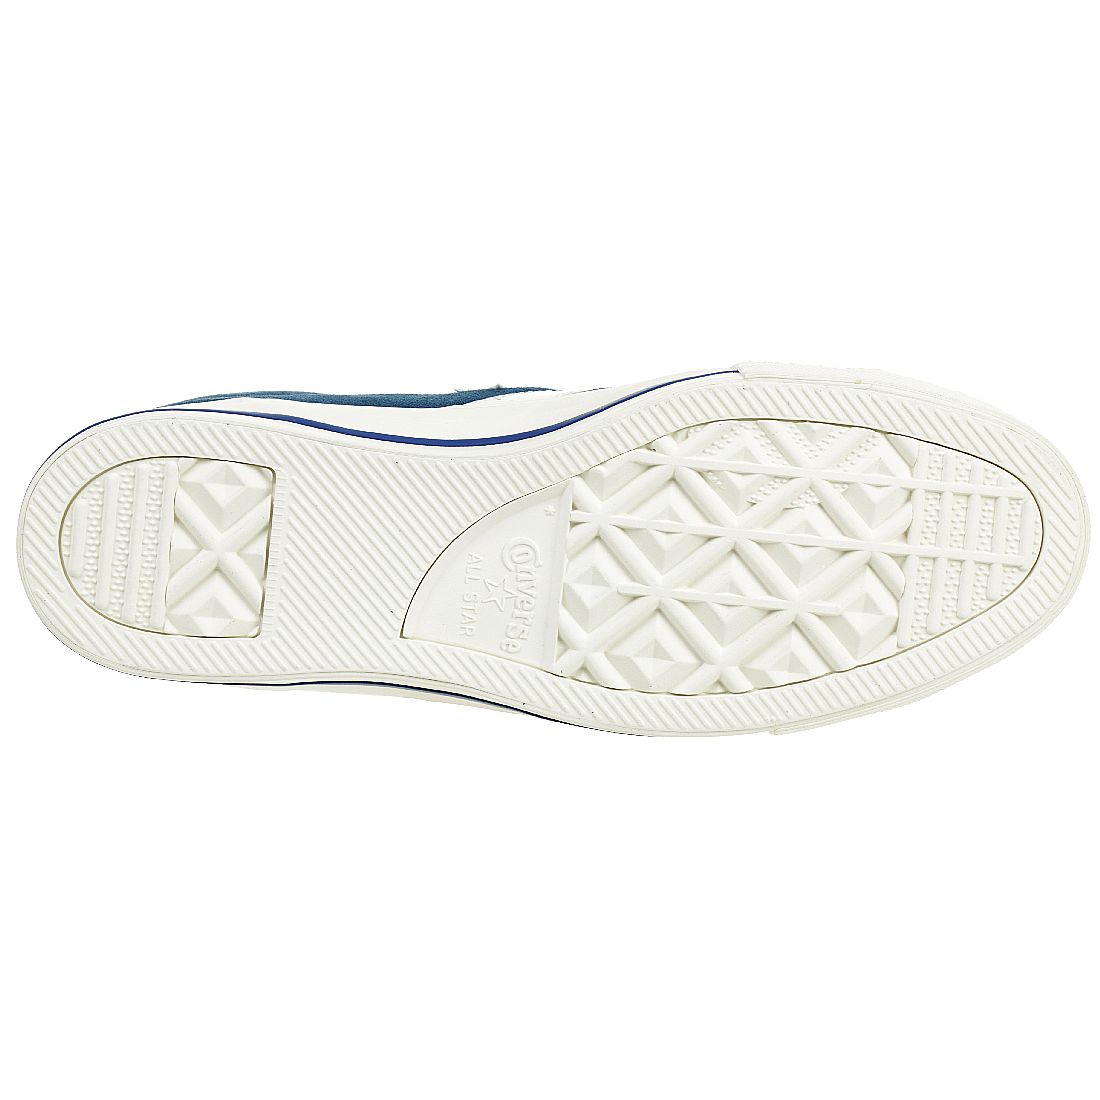 Converse STAR PLAYER OX Schuhe Sneaker Wildleder blau 162569C Gr.36,5